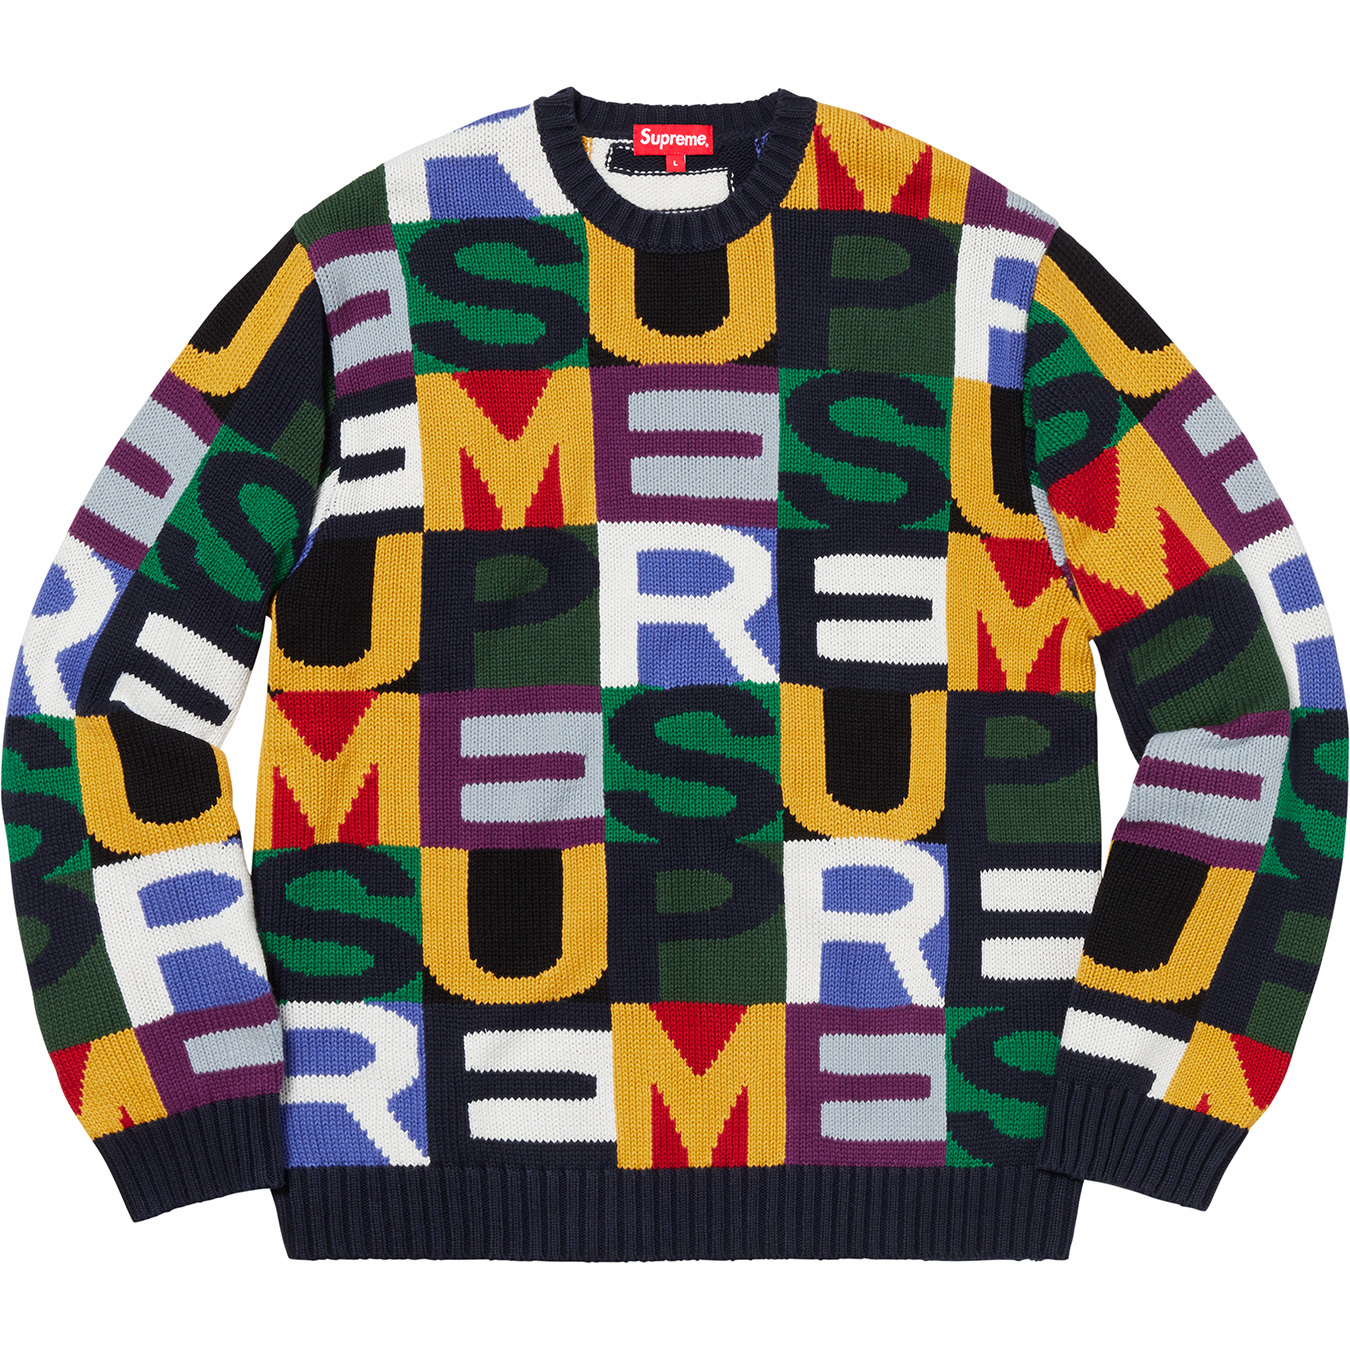 Big Letters Sweater - fall winter 2018 - Supreme